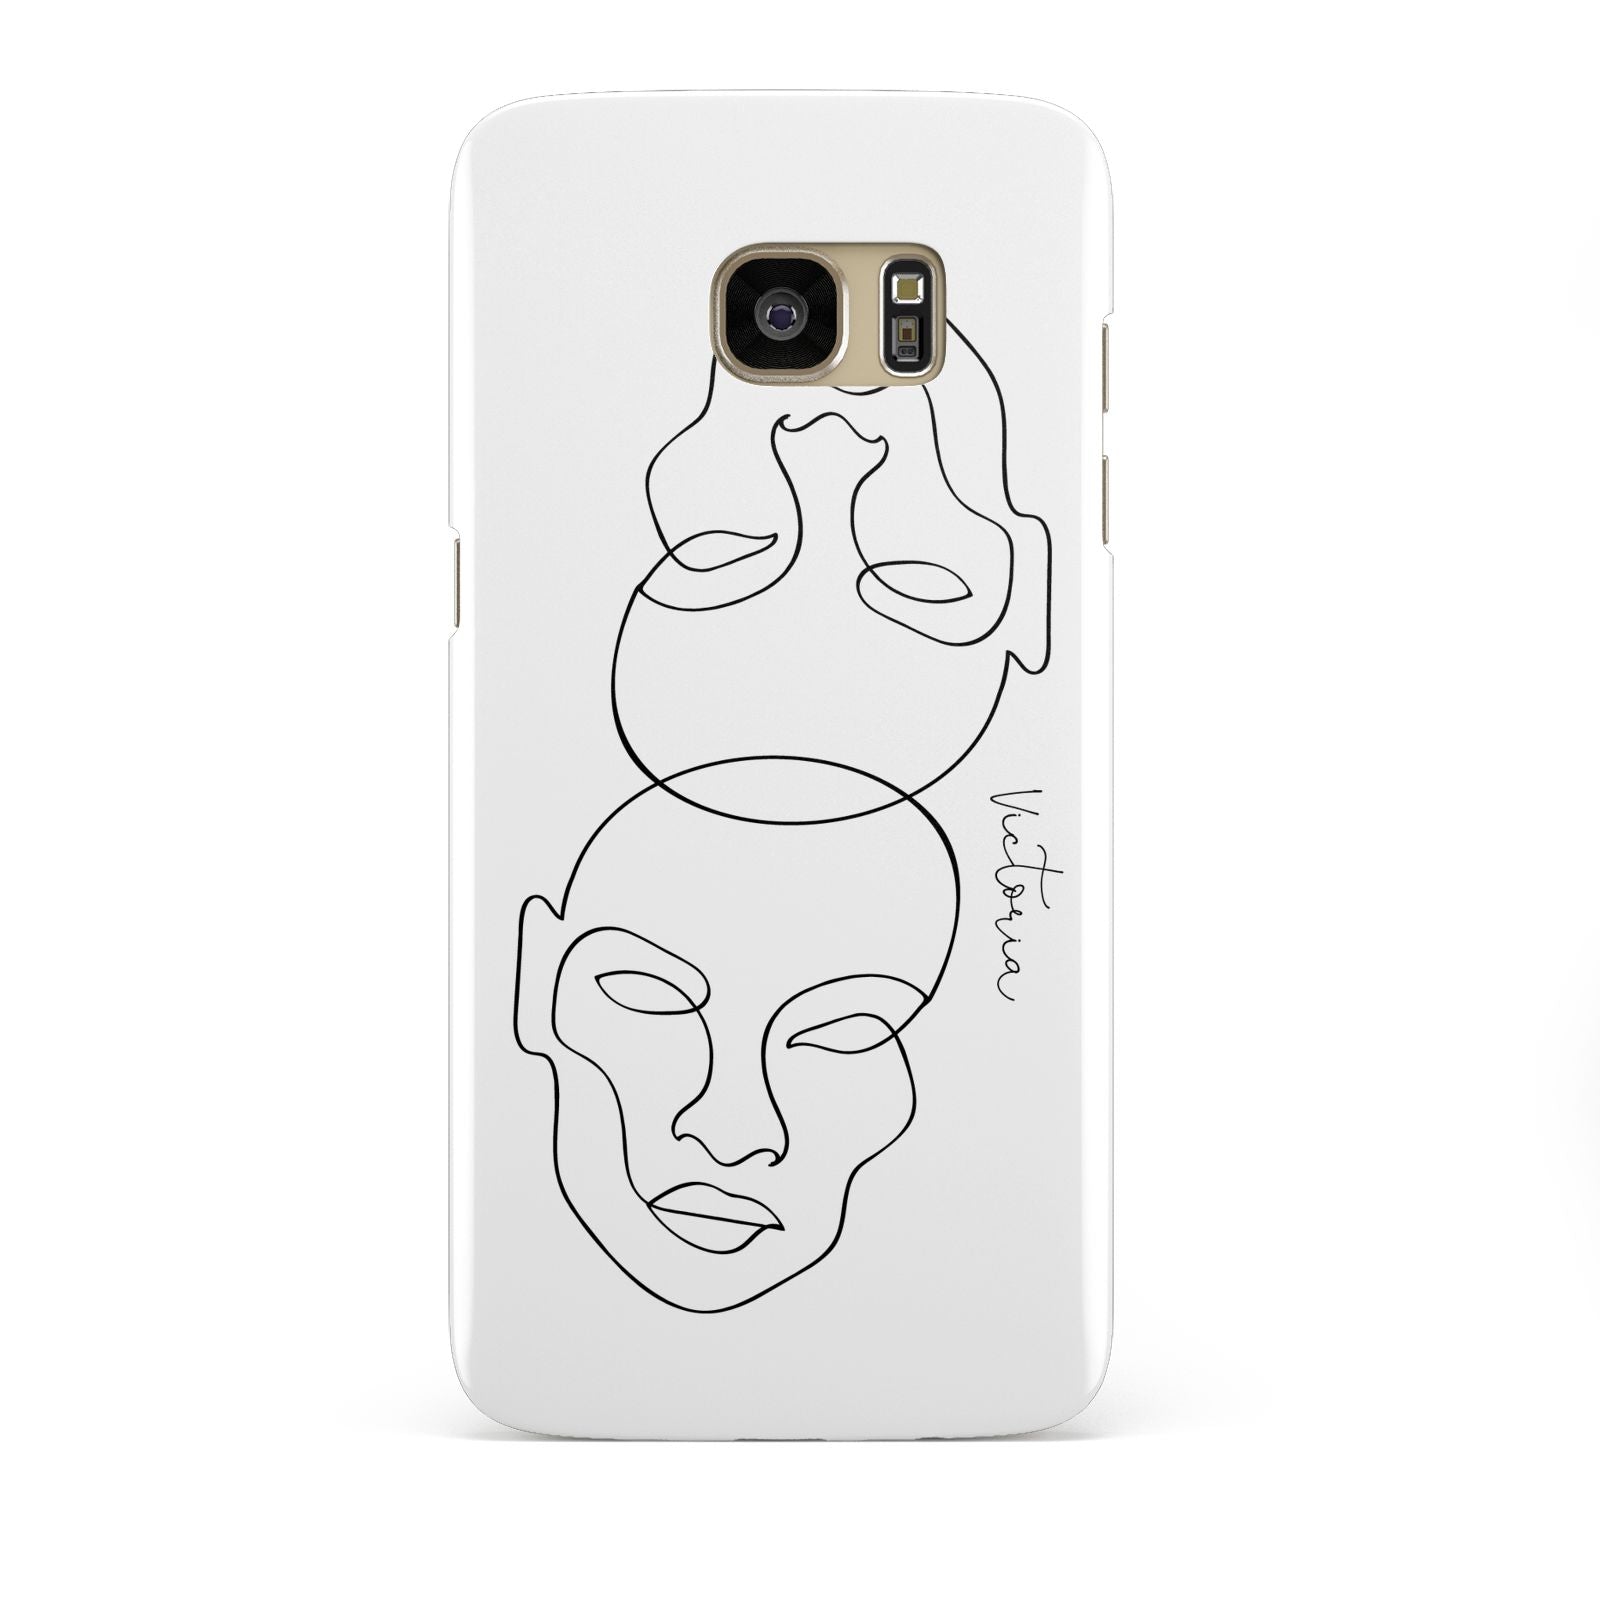 Personalised White Line Art Samsung Galaxy S7 Edge Case